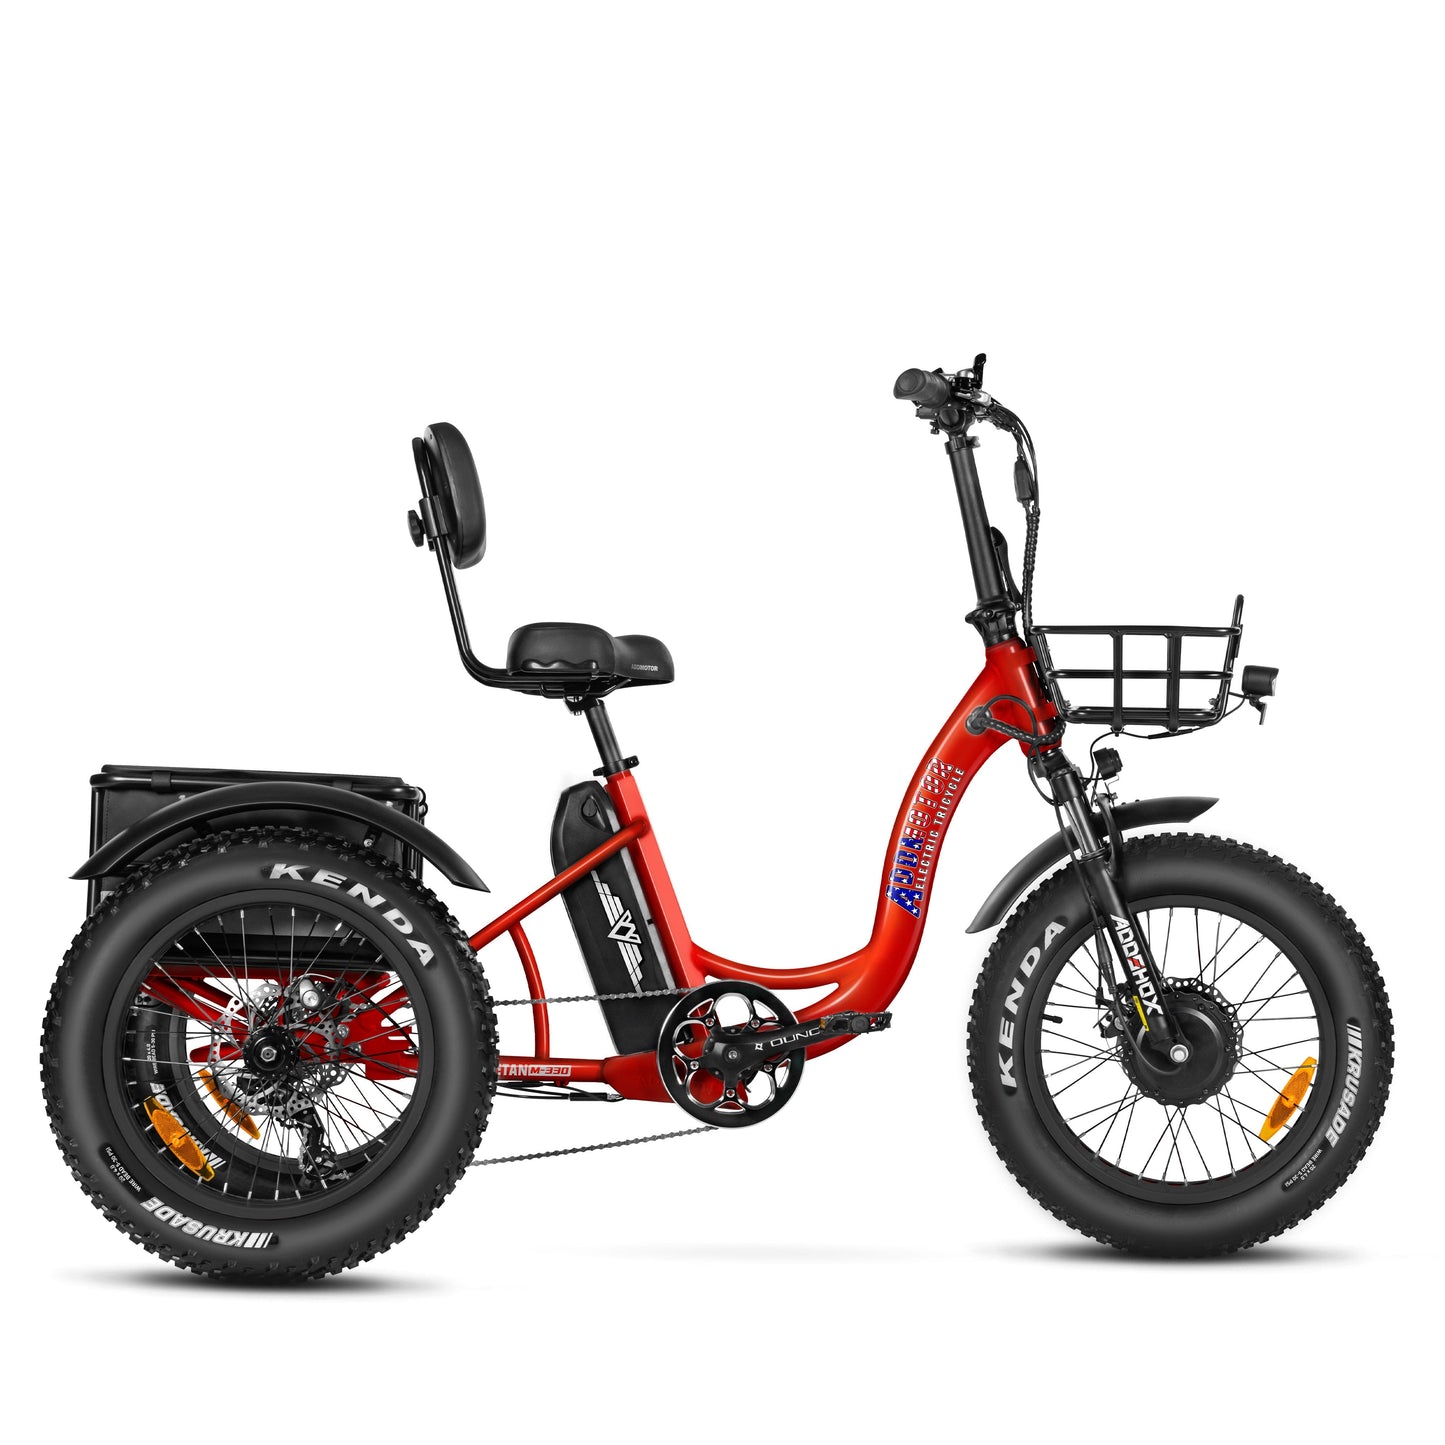 Triketan M-330 Electric Tricycle | $262 FREE GIFTS